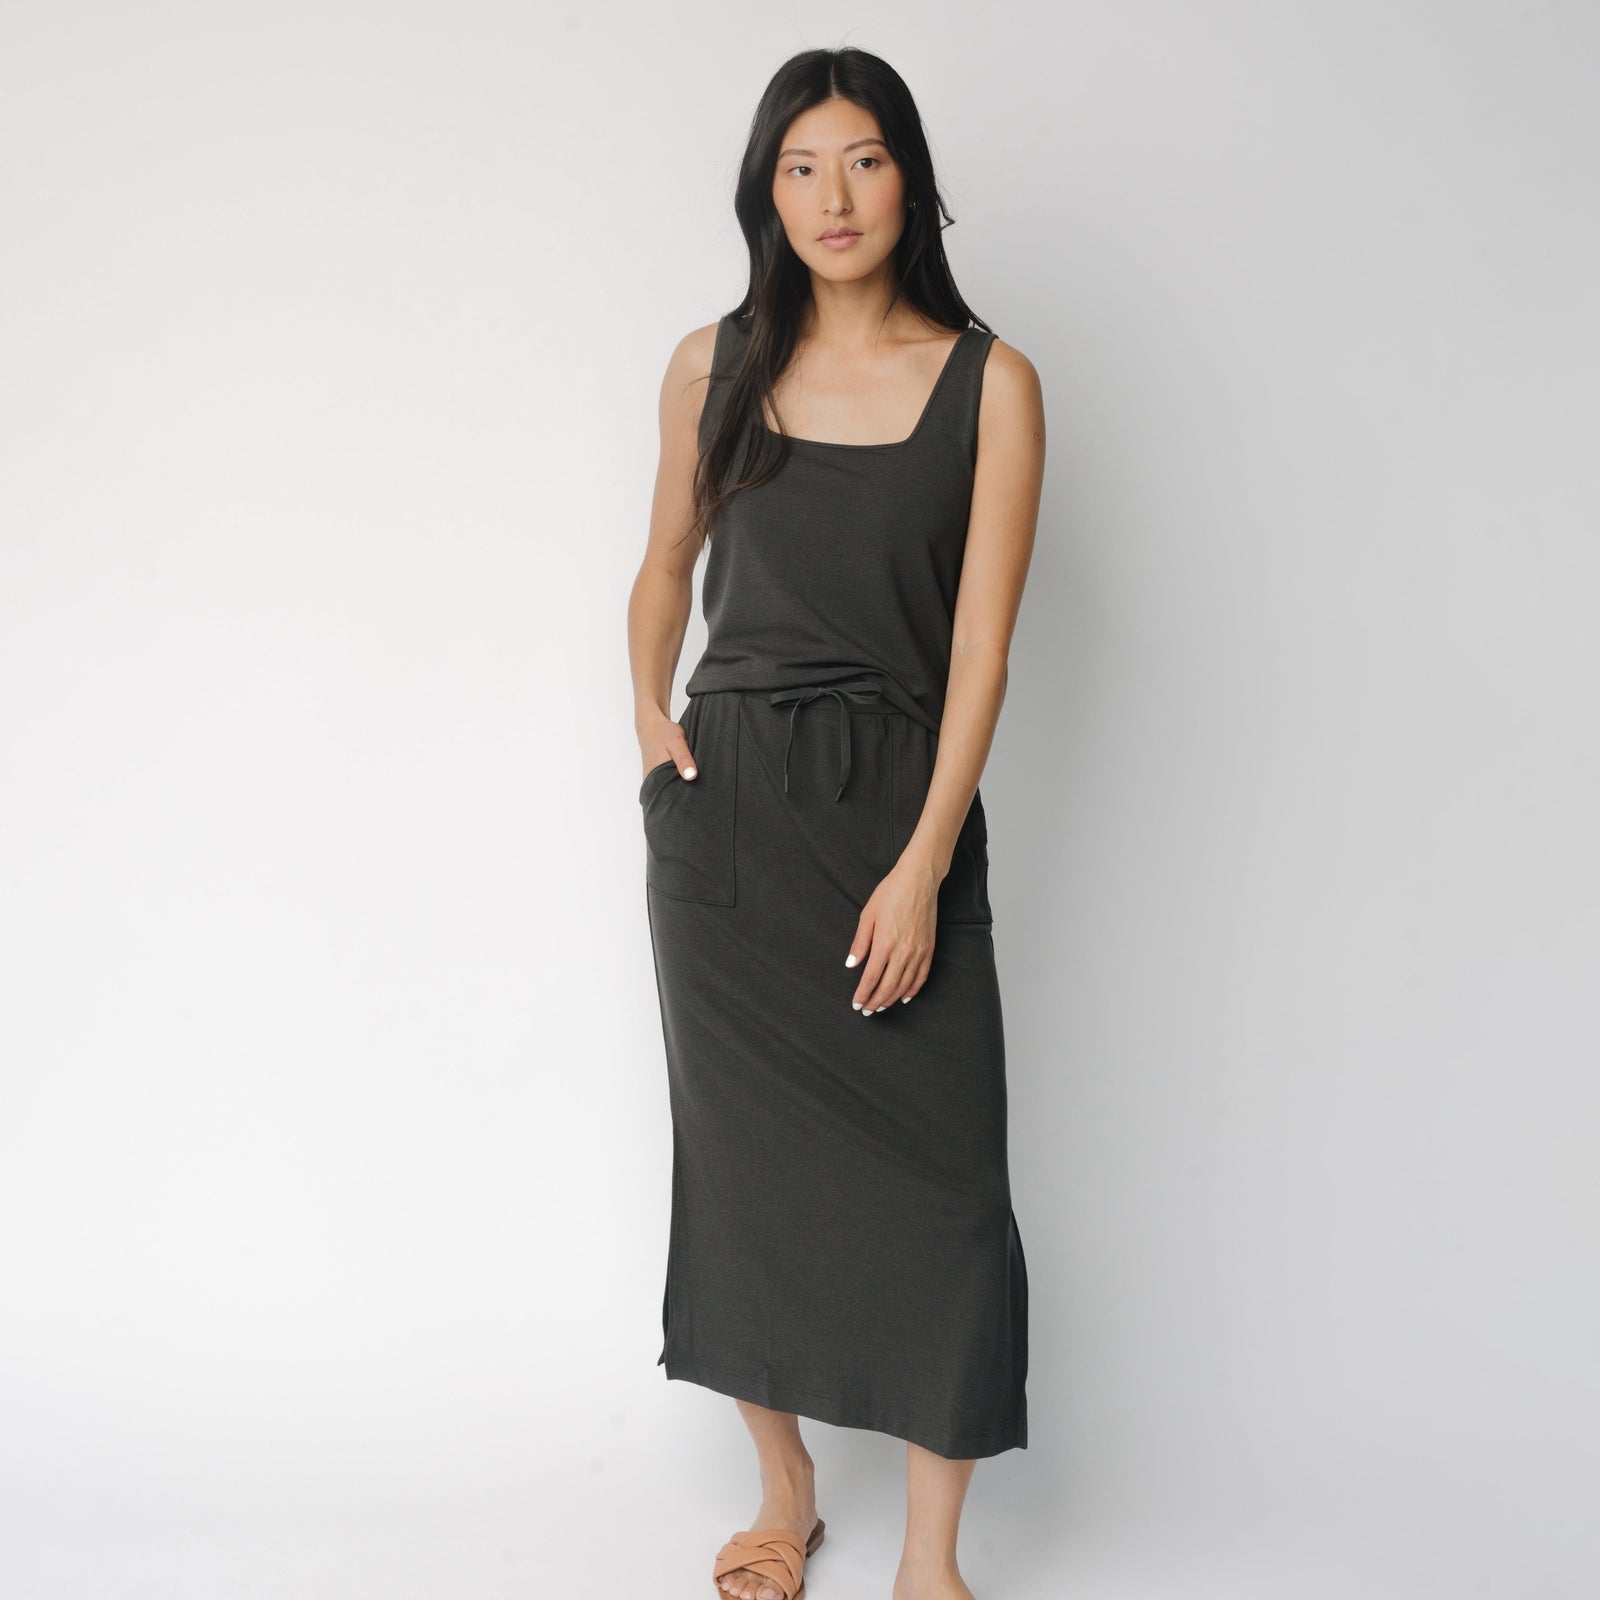 Soft Essential Bamboo Knit Skirt